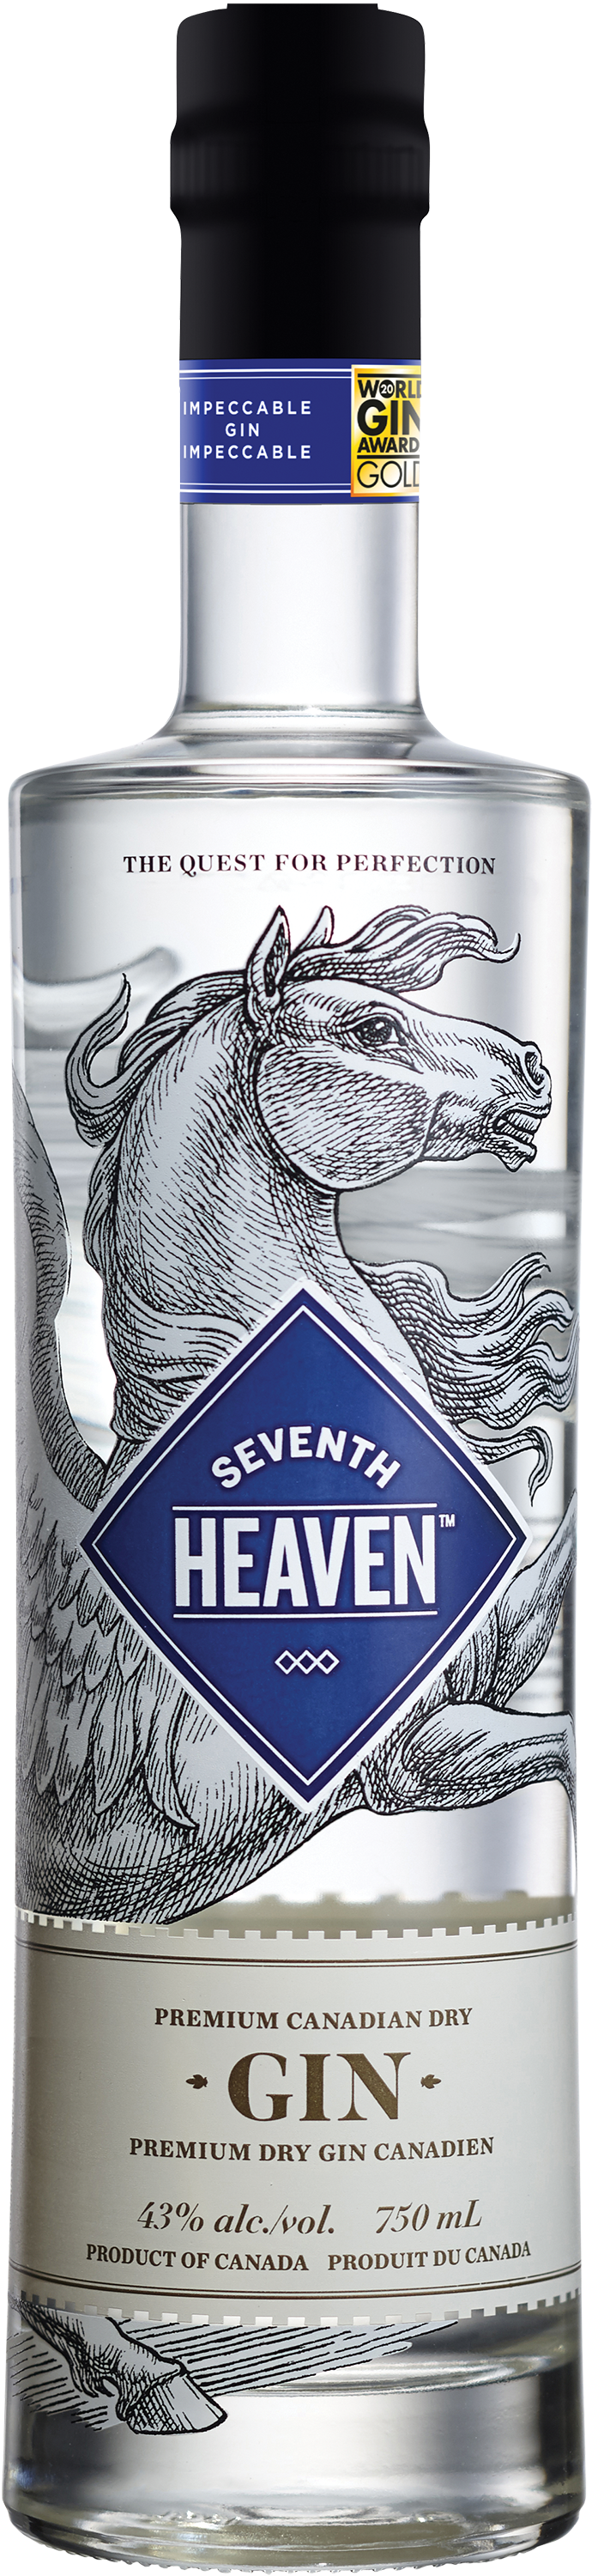 Seventh Heaven Premium Dry Gin canadien